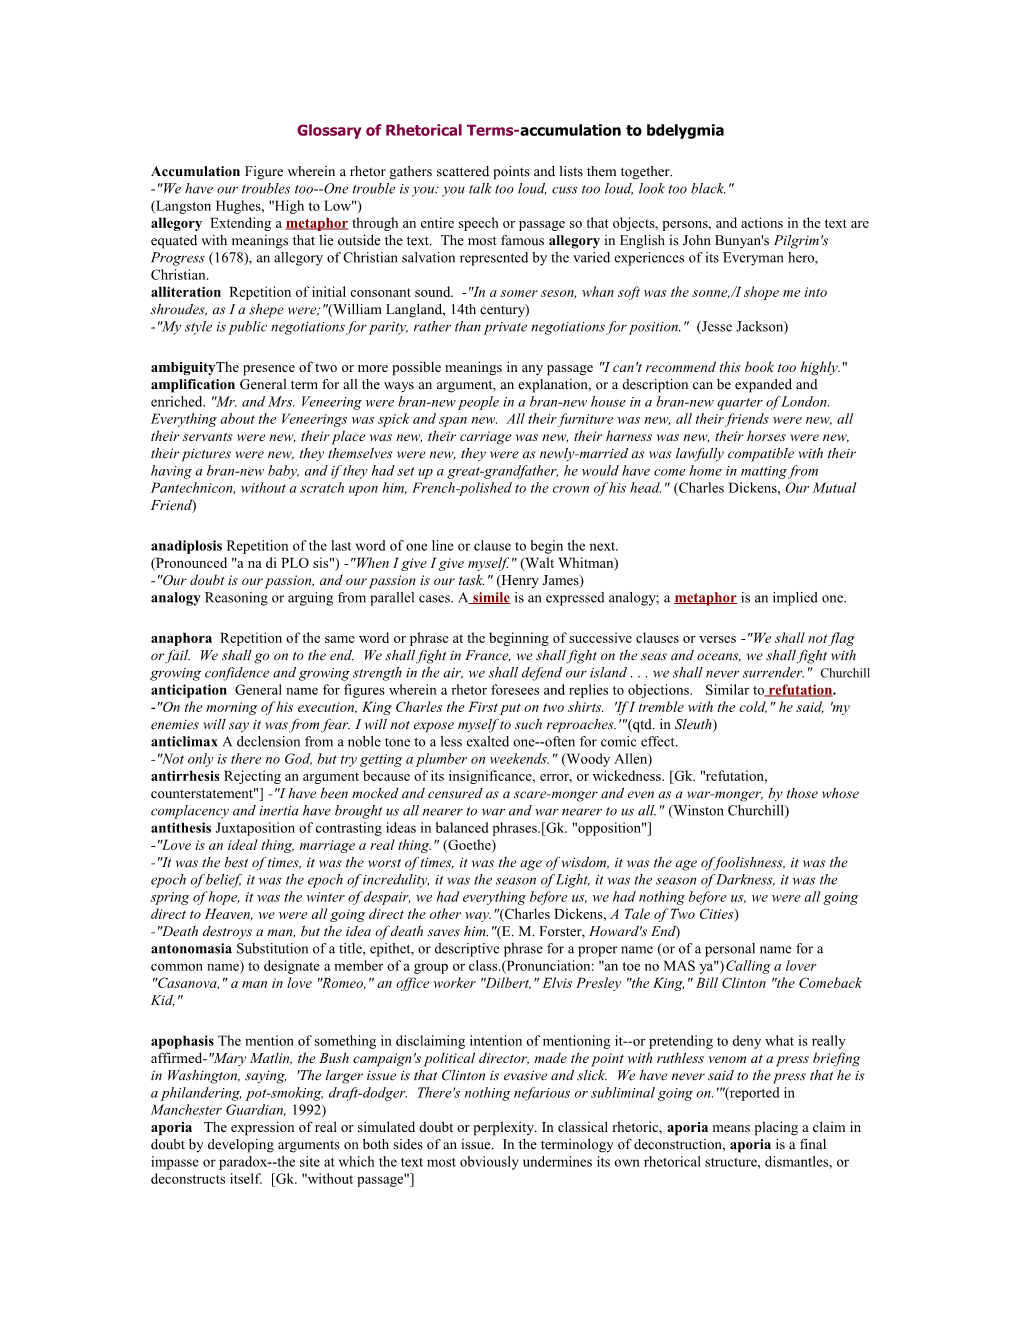 Glossary of Rhetorical Terms-Accumulation to Bdelygmia